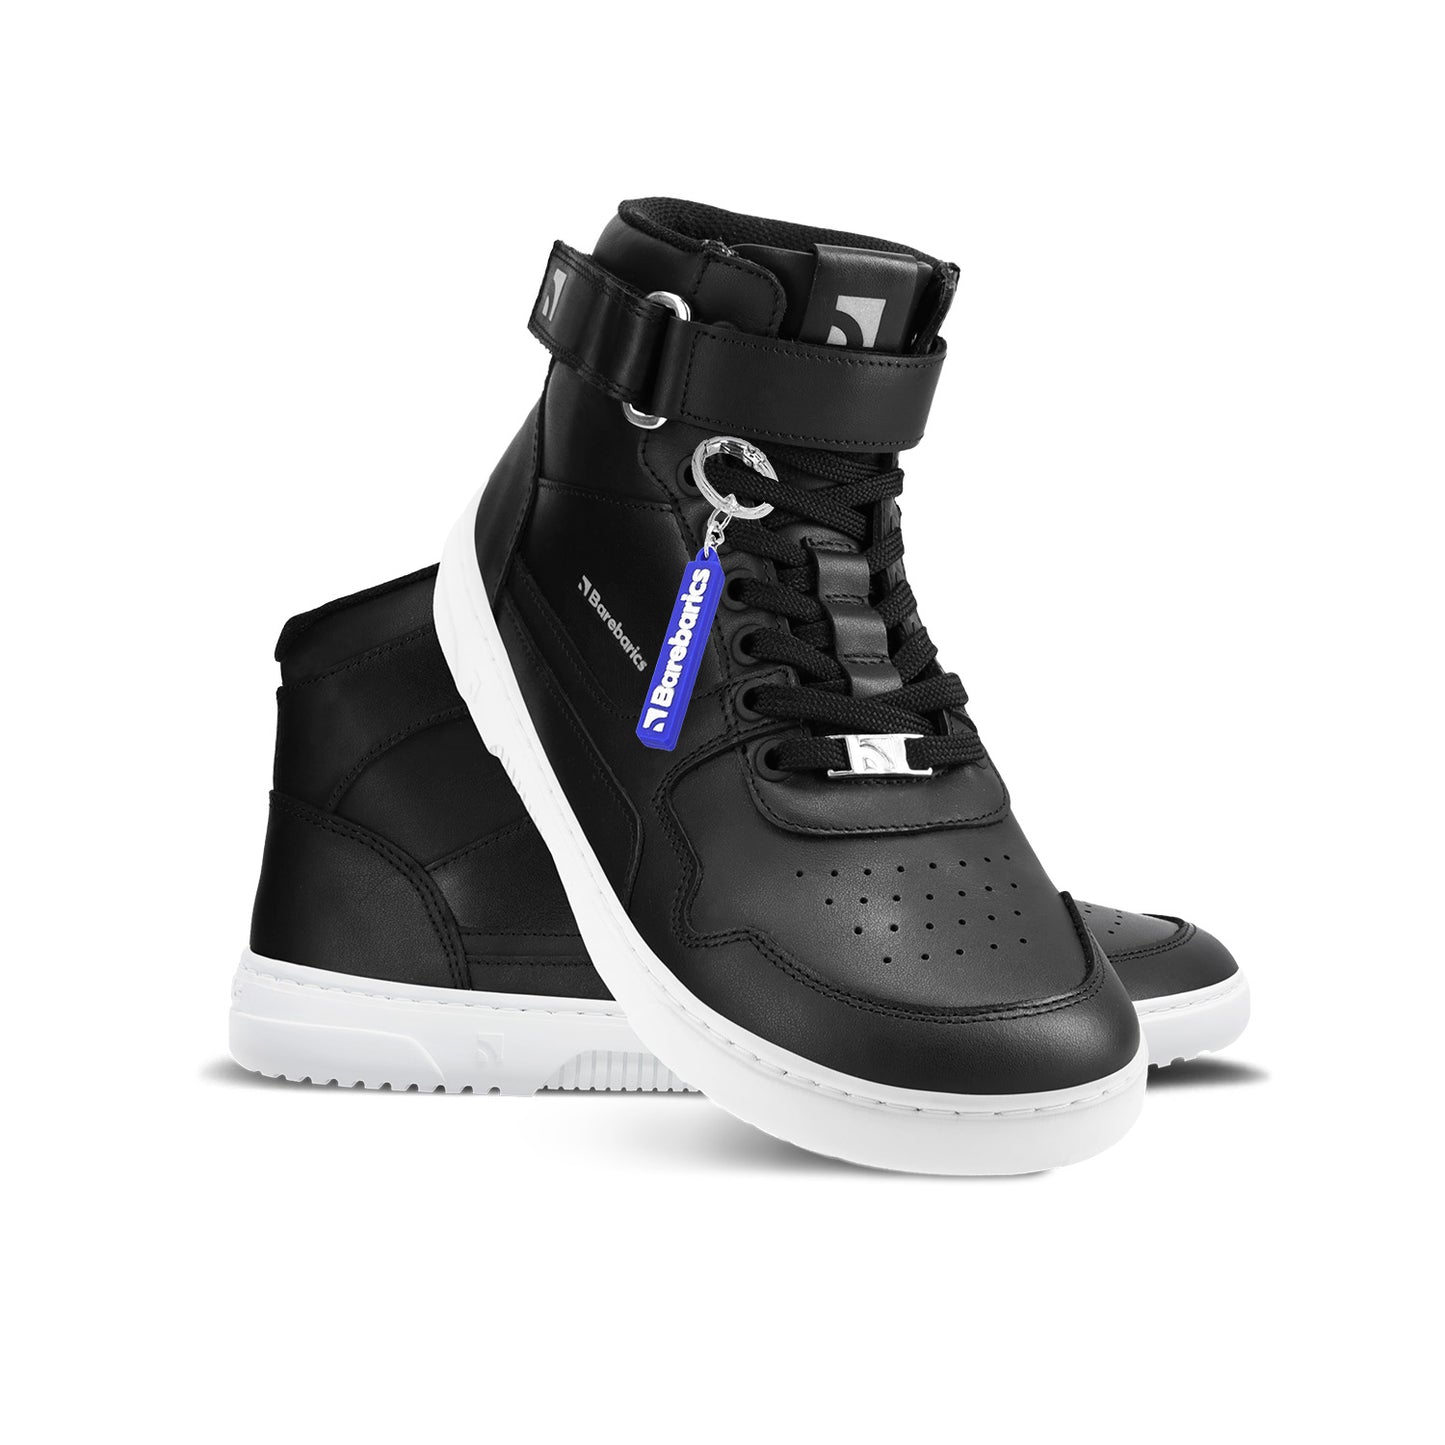 Barefoot Sneakers Barebarics Zing - High Top - Black & White - Leather